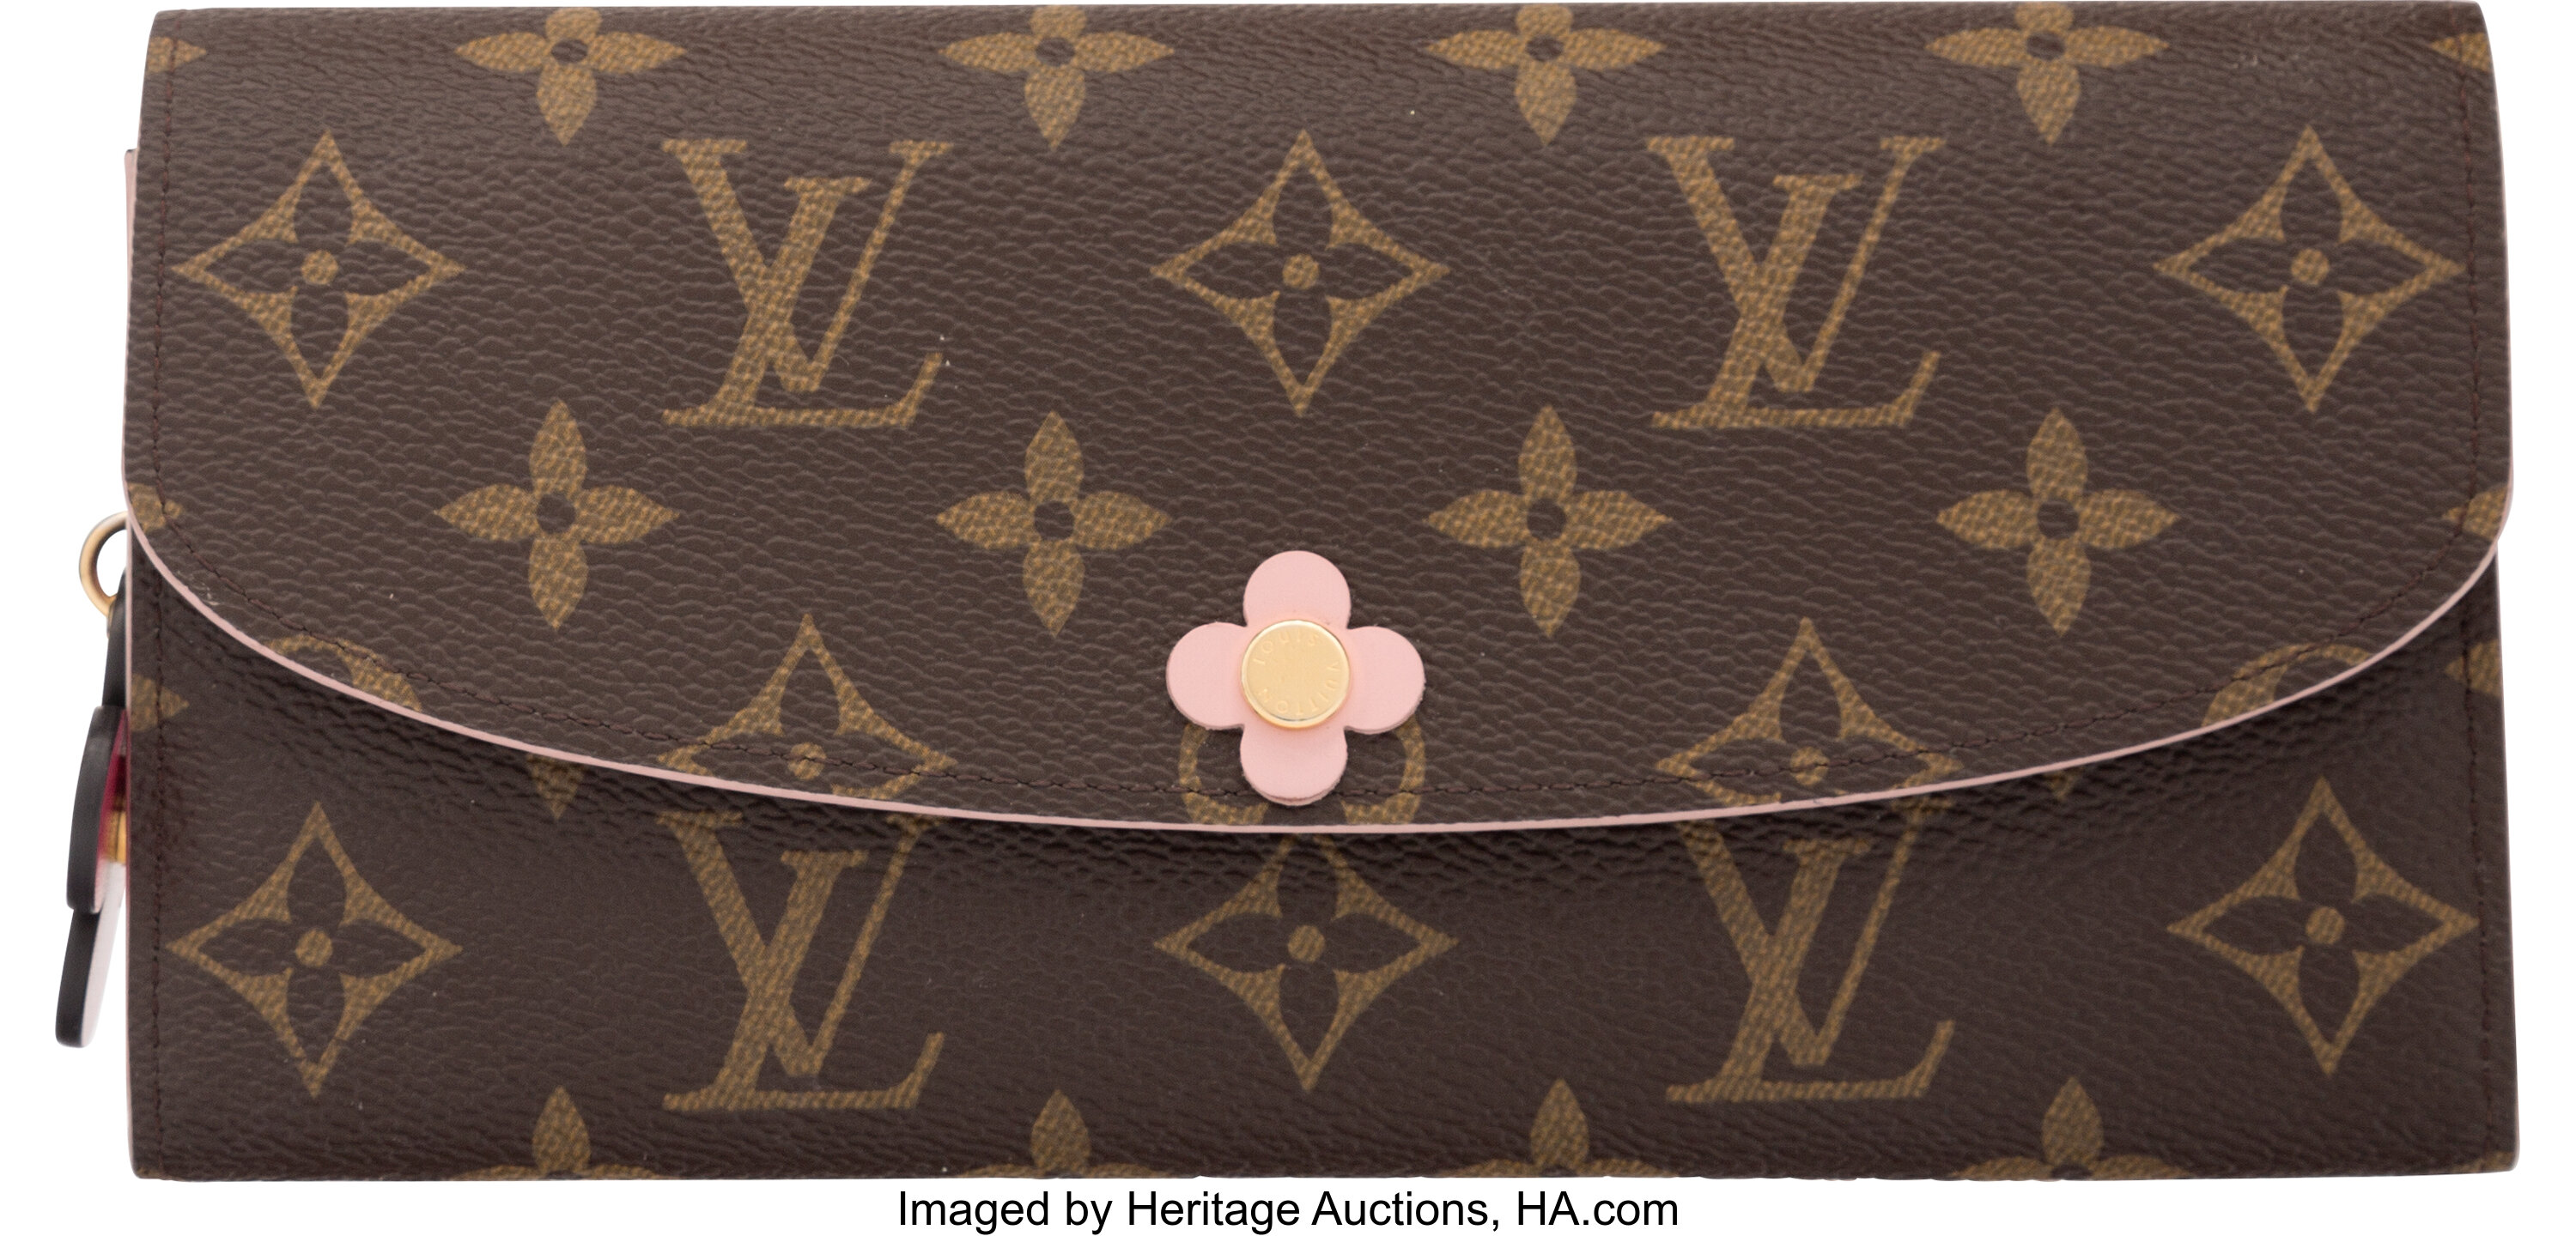 Sold at Auction: Louis Vuitton, Louis Vuitton - Limited Edition Monogram  Bloom Flower Emilie Wallet w/ Full Kit